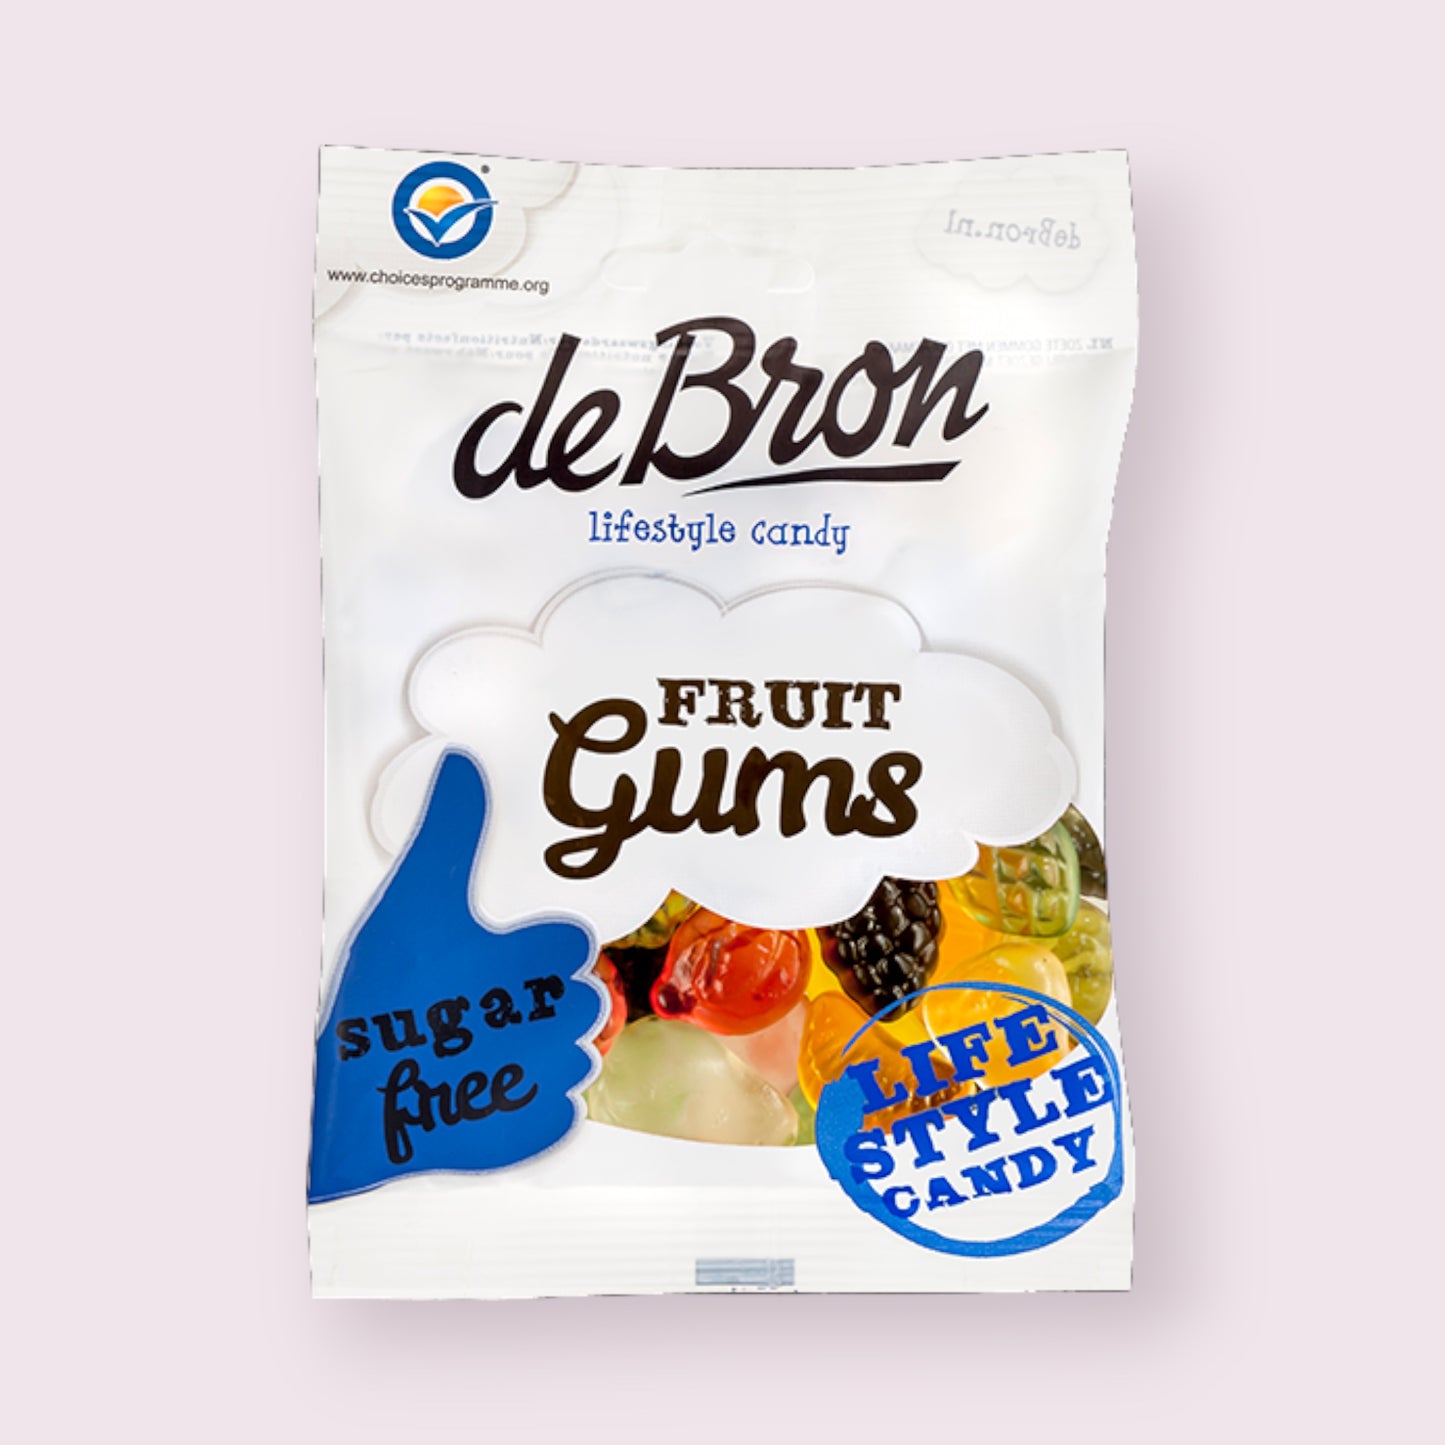 Debron Sugar Free Fruit Gums Bag  Pixie Candy Shoppe   